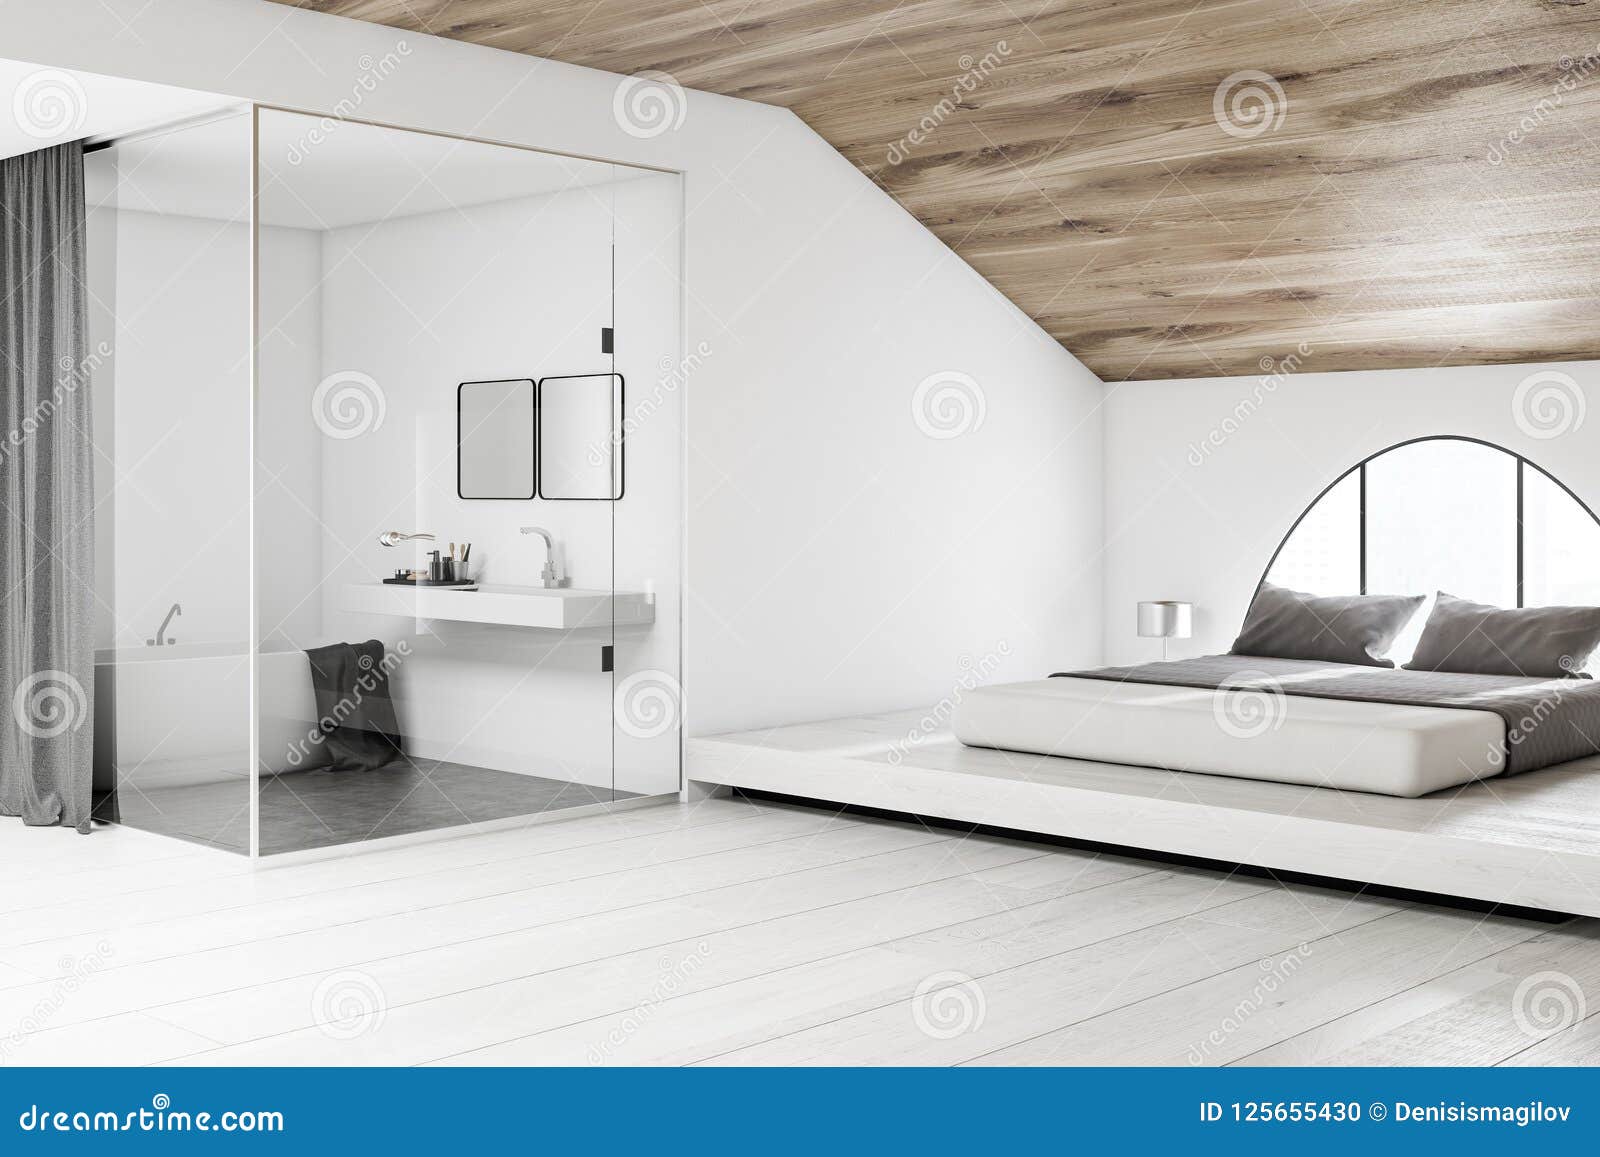 Attic White Bedroom Corner Bathroom Wood Ceiling Stock